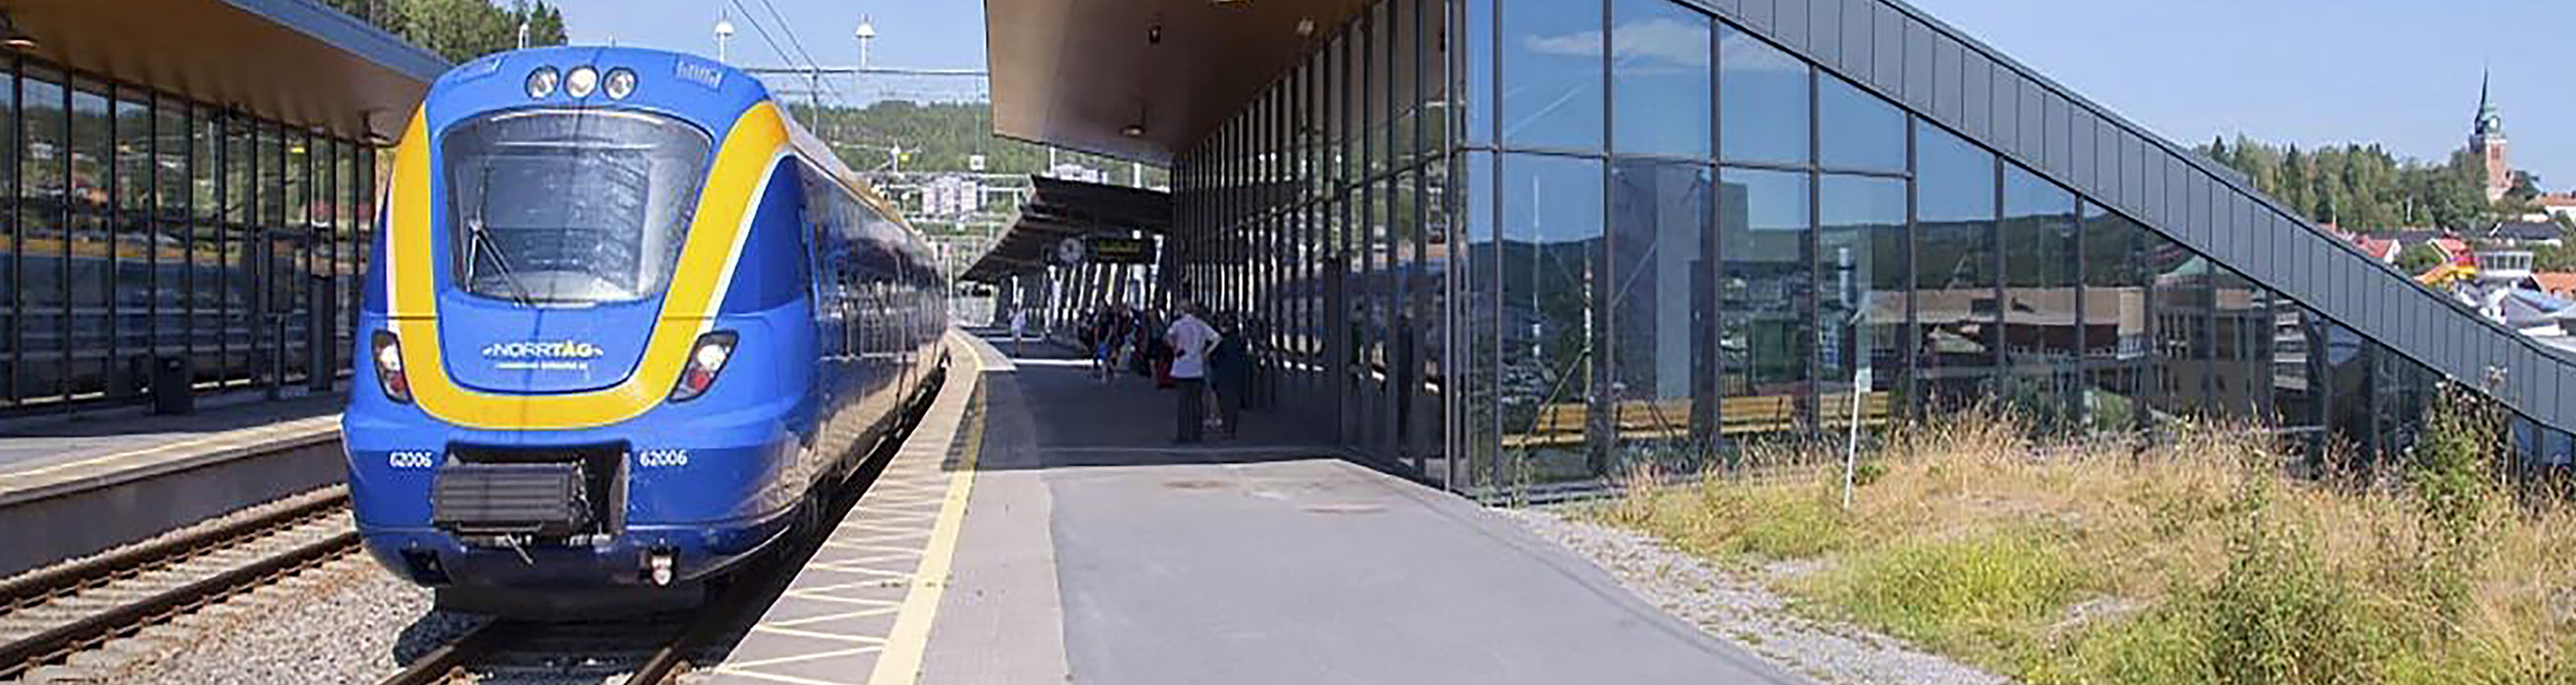 Tog på Botniabanan terminal